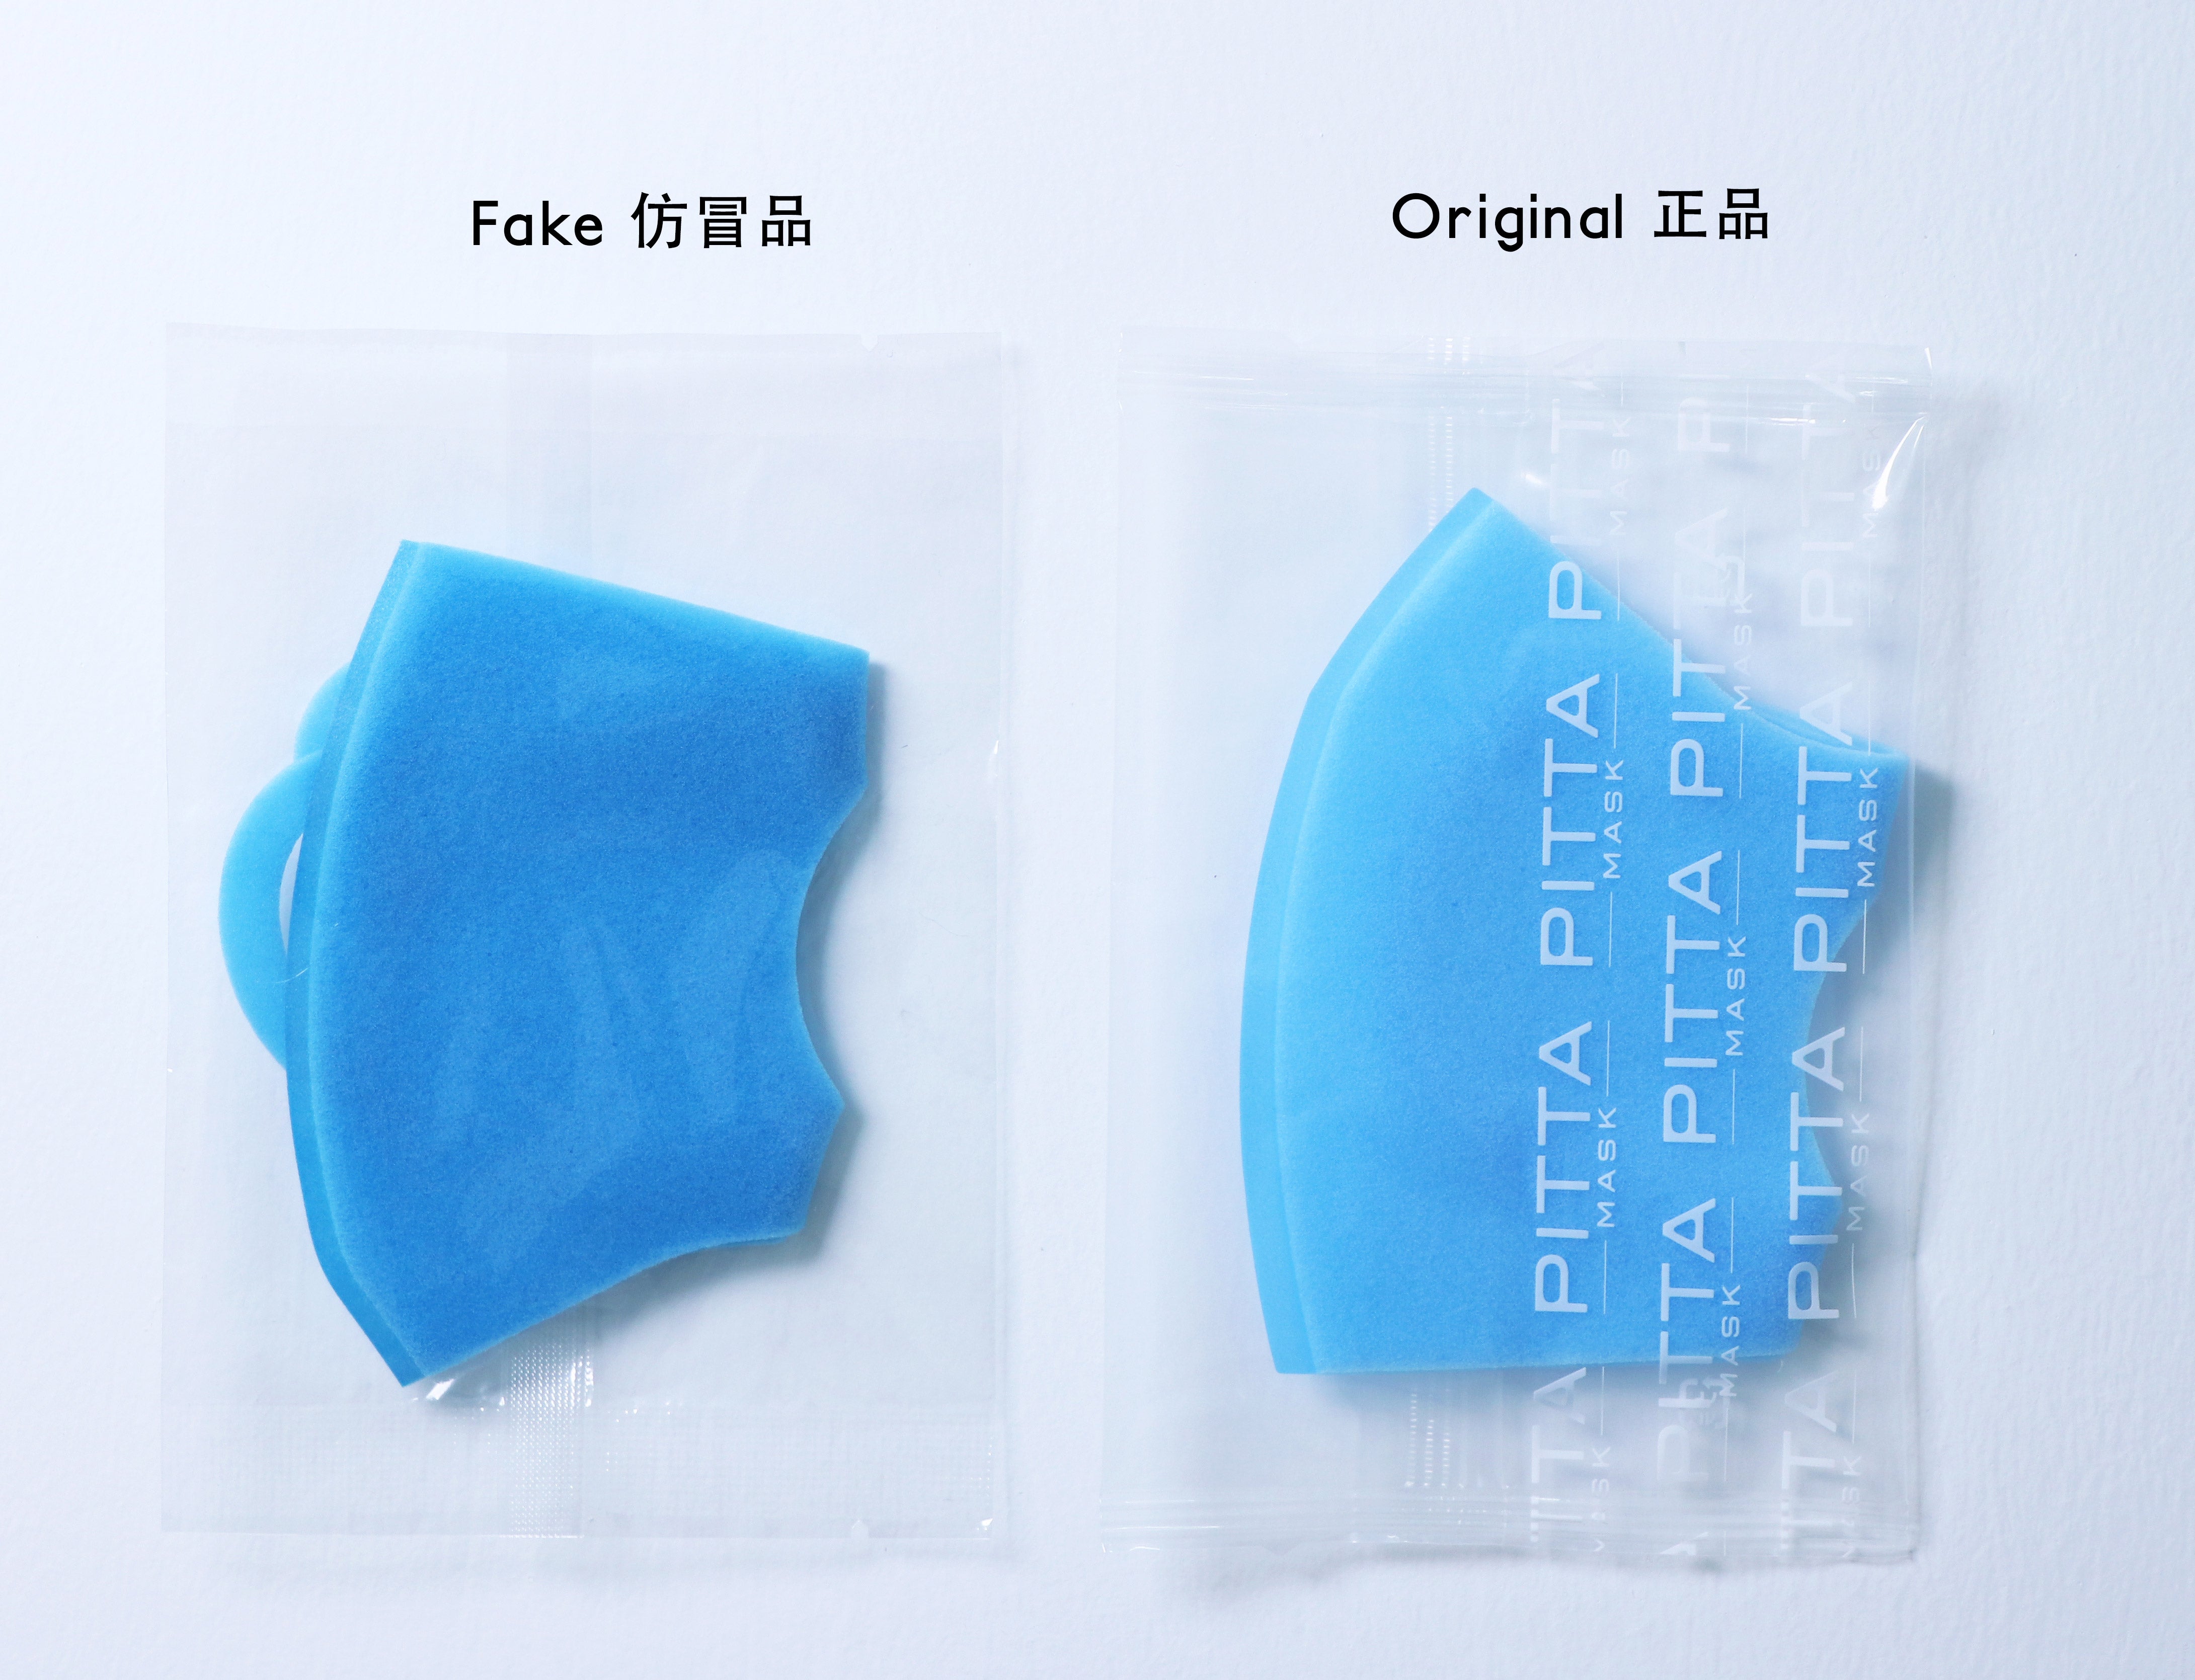 Inside packaging of fake and original pitta mask